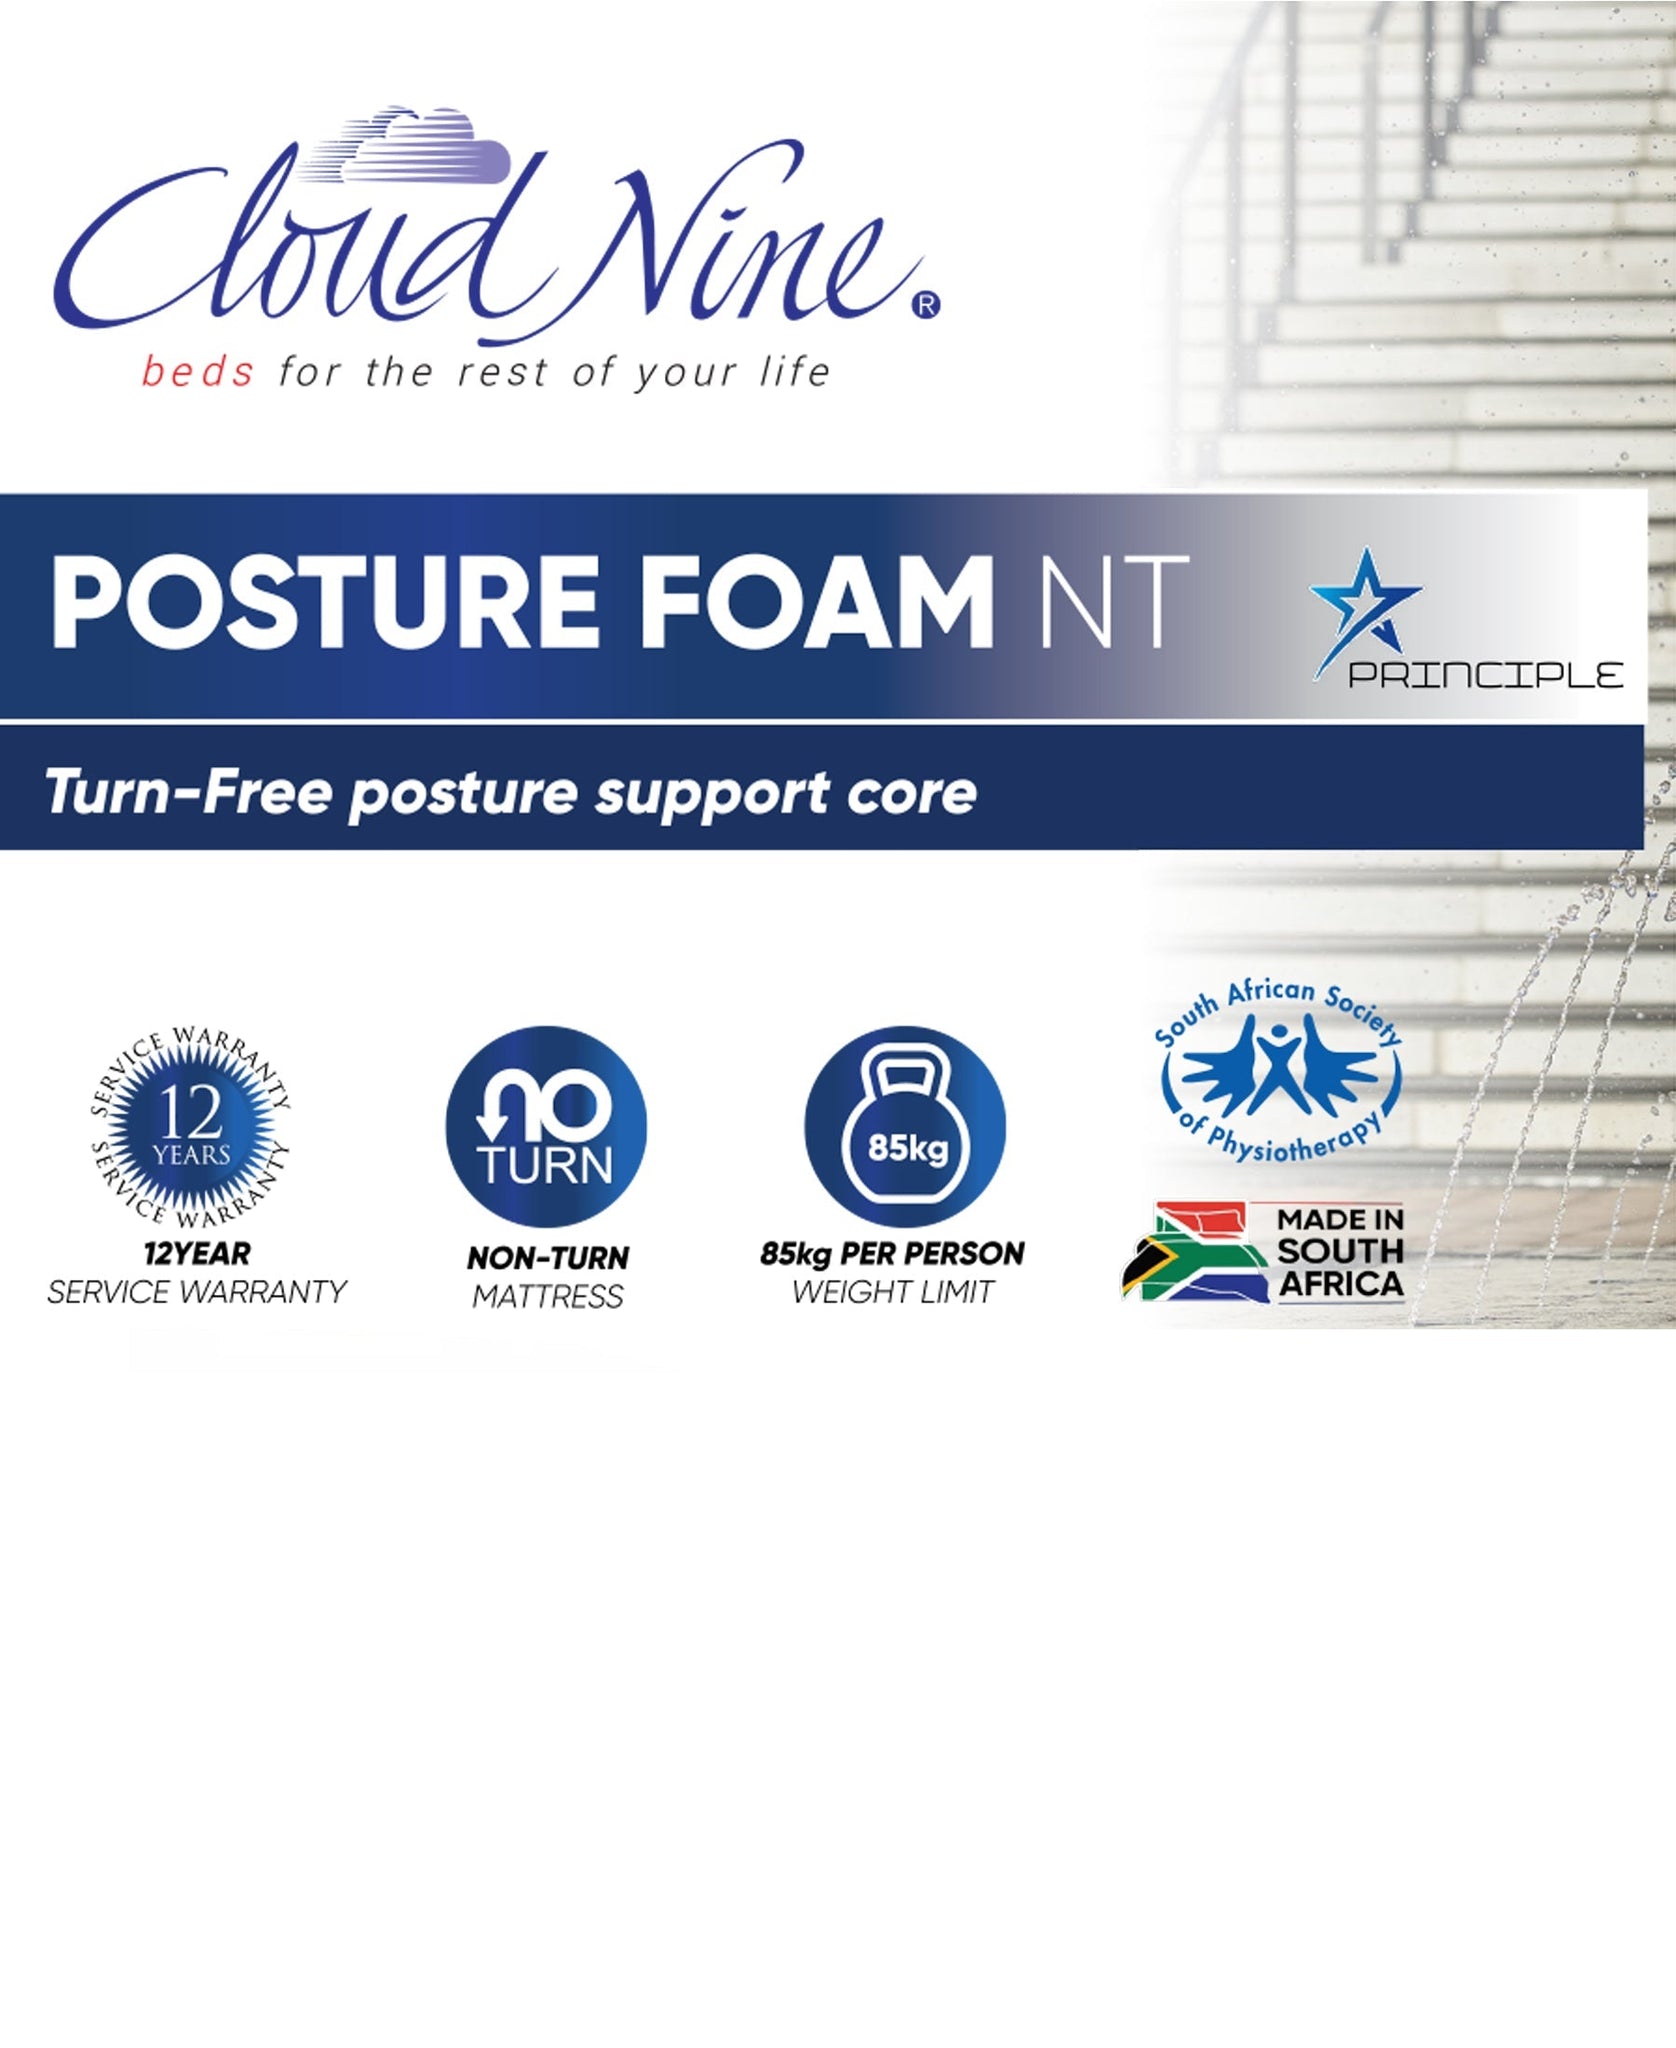 Cloud Nine Posture Foam NT Bed Double